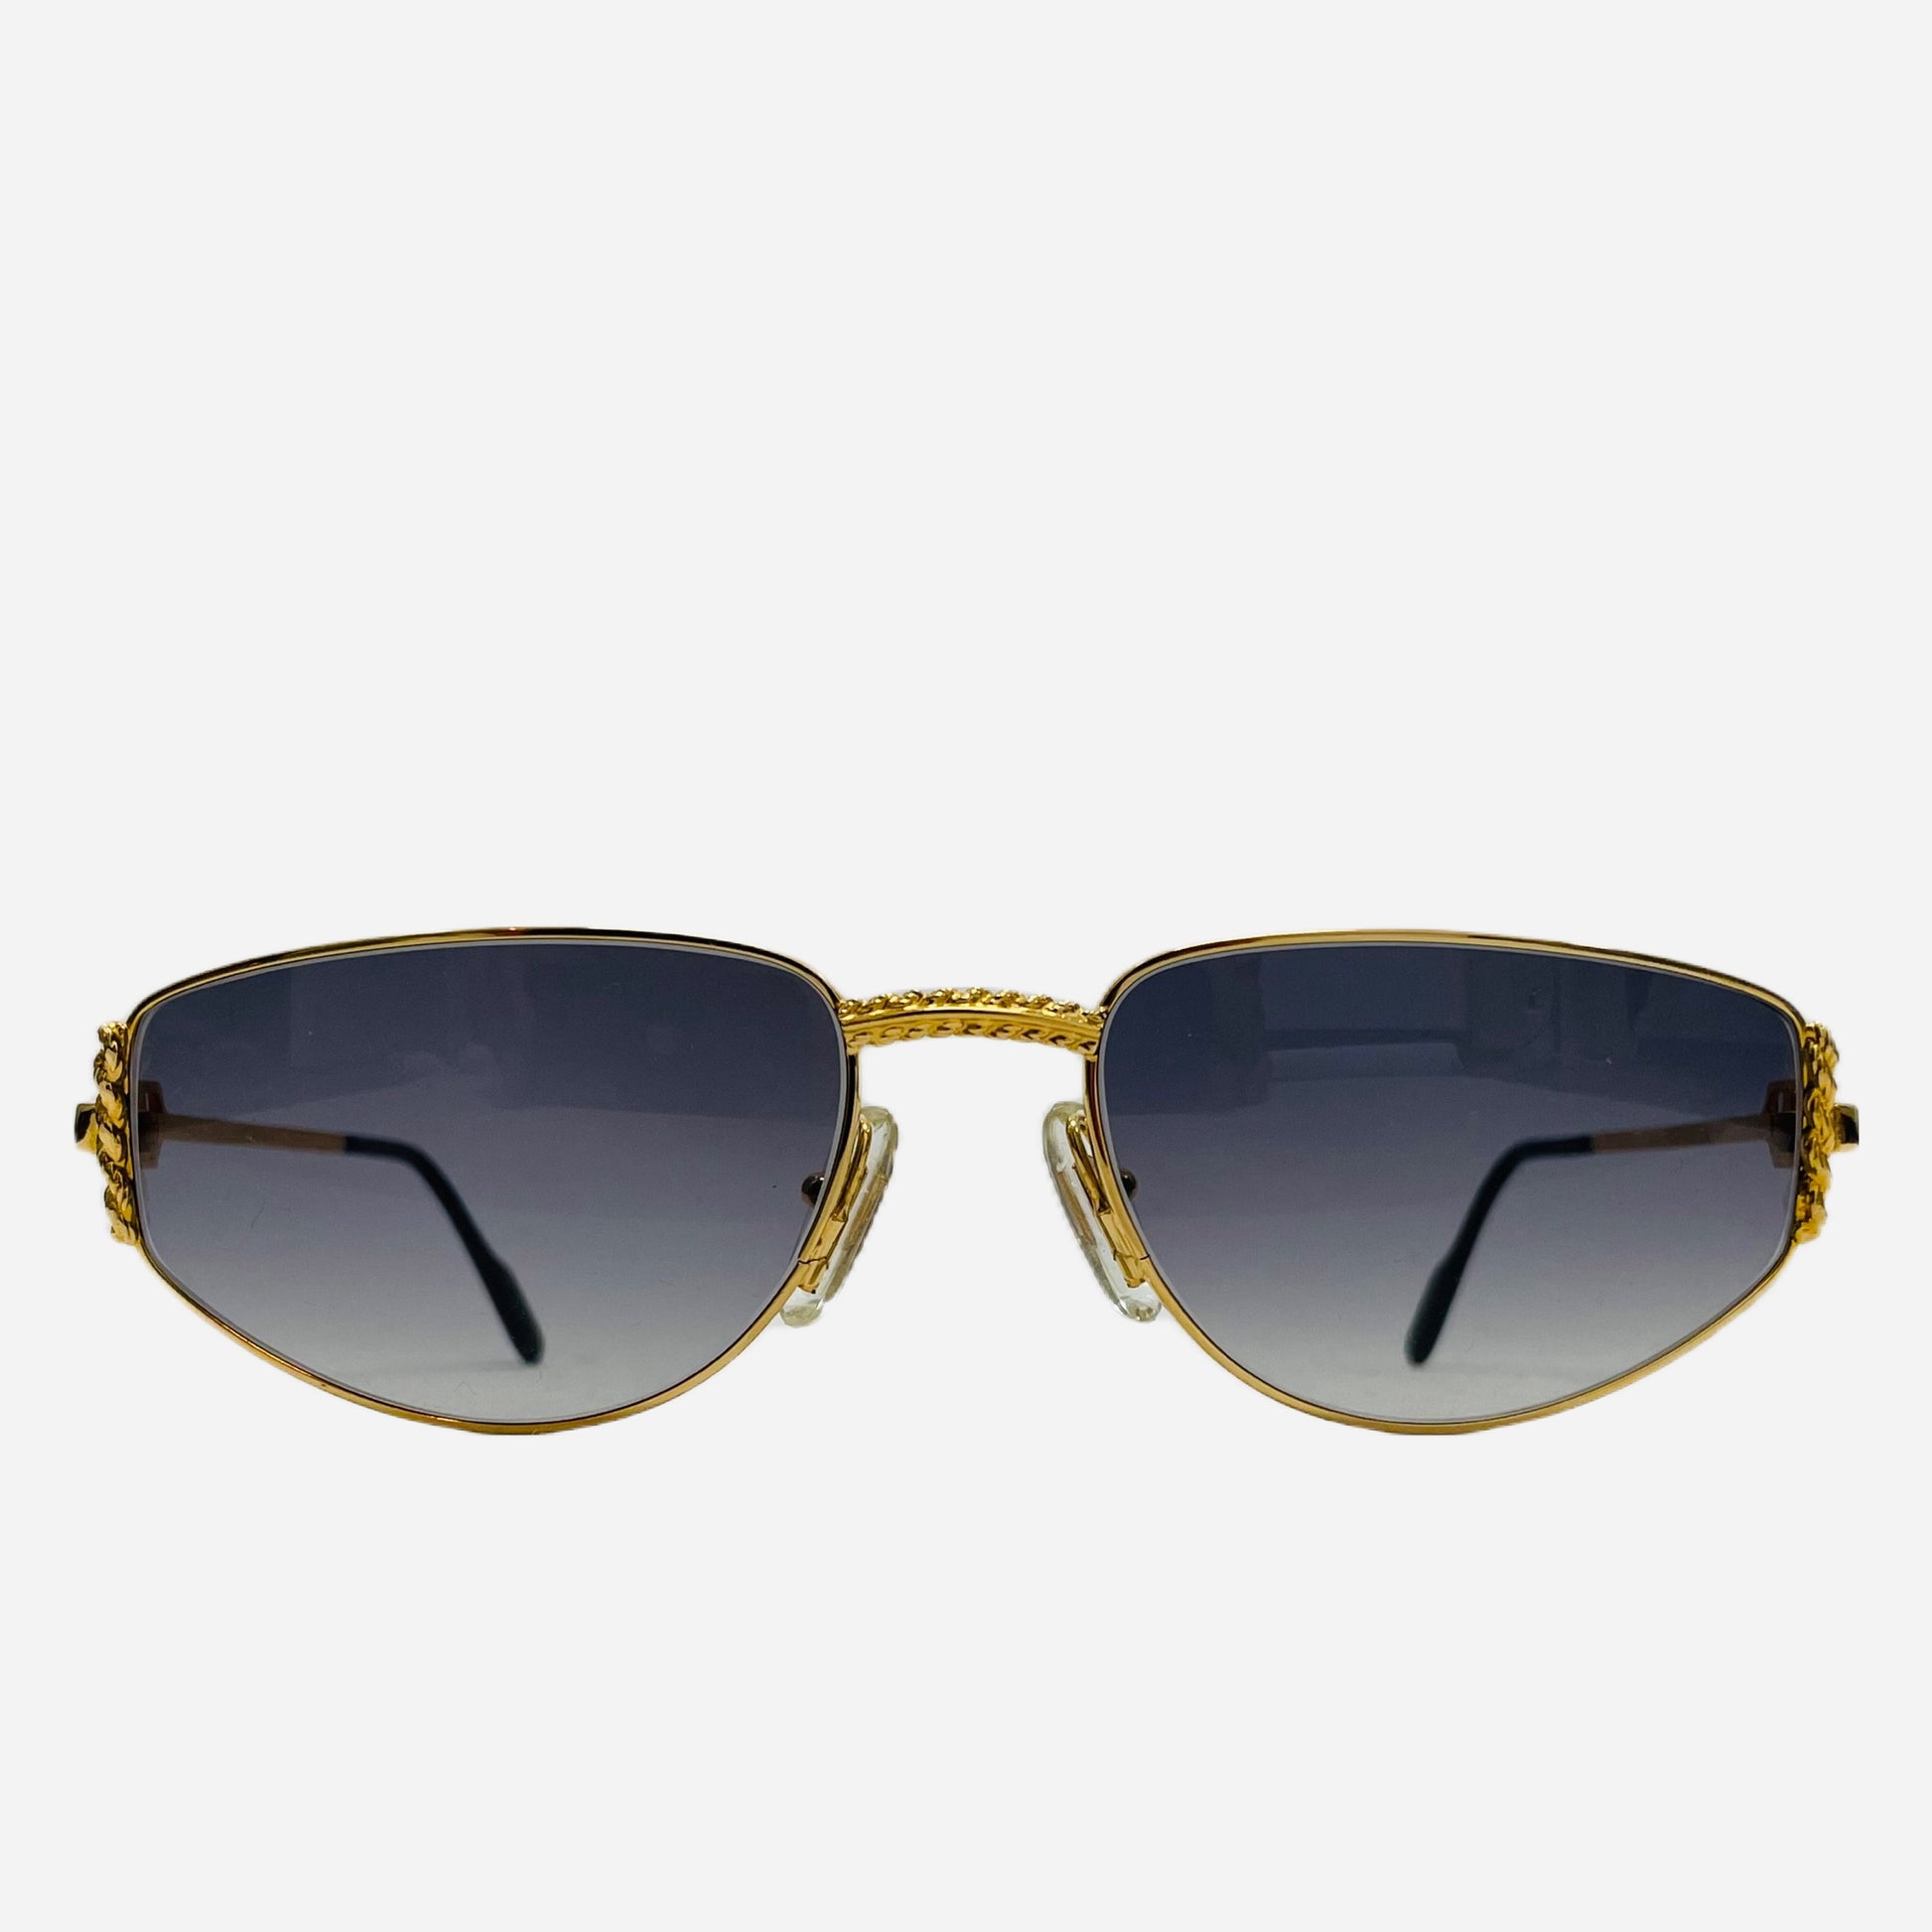 Tiffany-Lunettes-Sonnenbrille-Sunglasses-the-seekers-vintage-designer-sunglasses-23-Carats-Gold